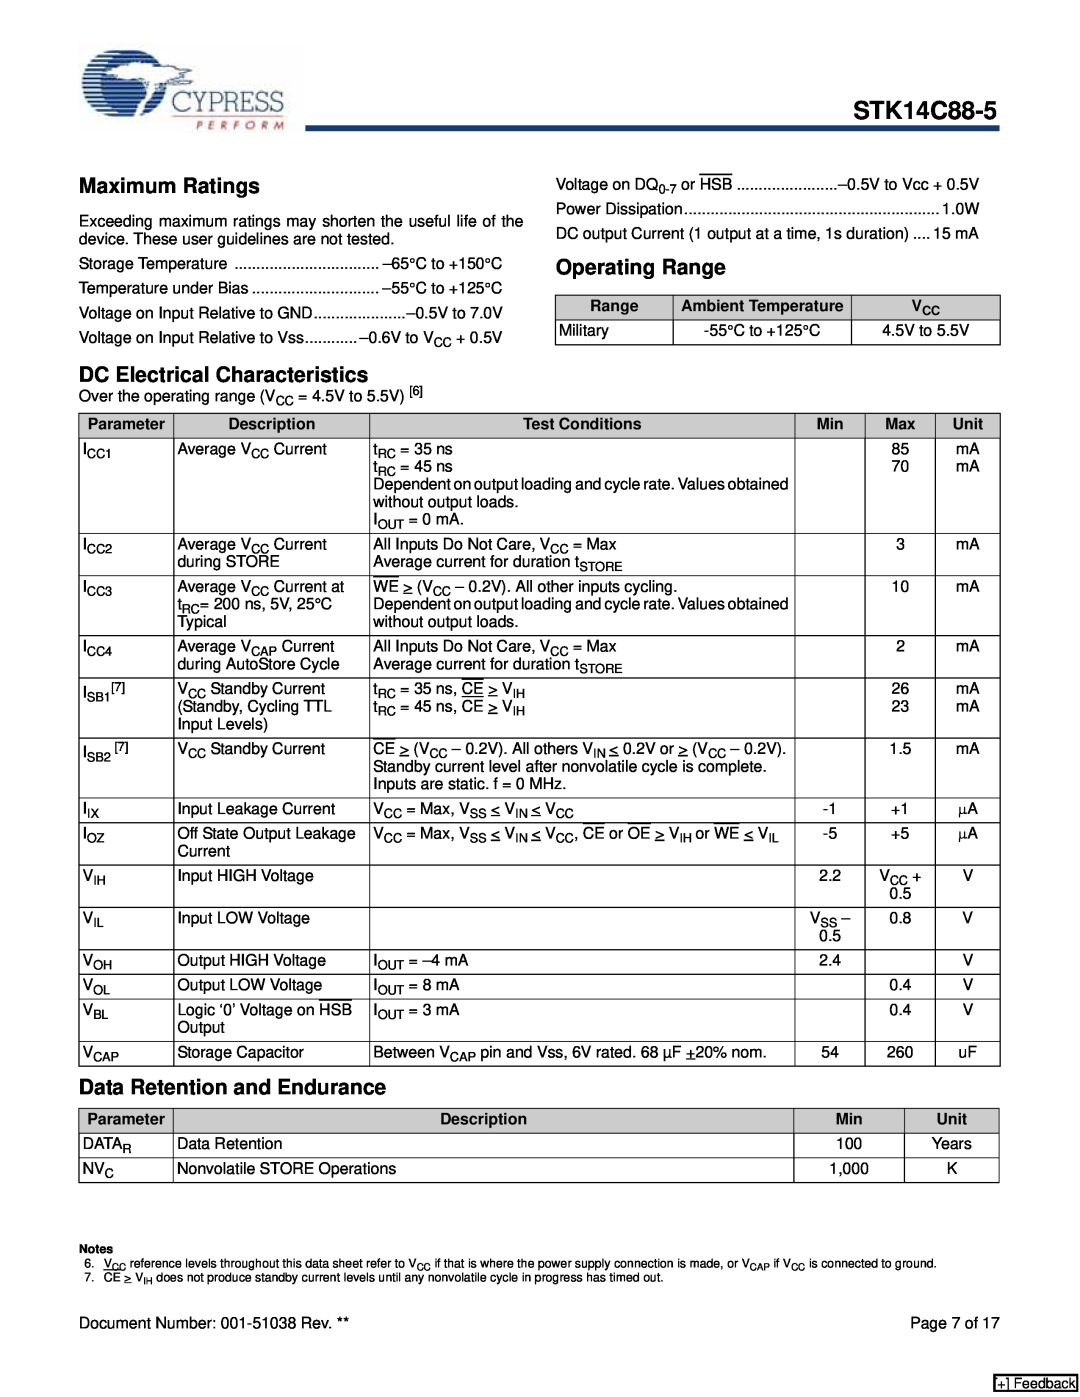 Cypress STK14C88-5 manual Maximum Ratings, Operating Range, DC Electrical Characteristics, Data Retention and Endurance 